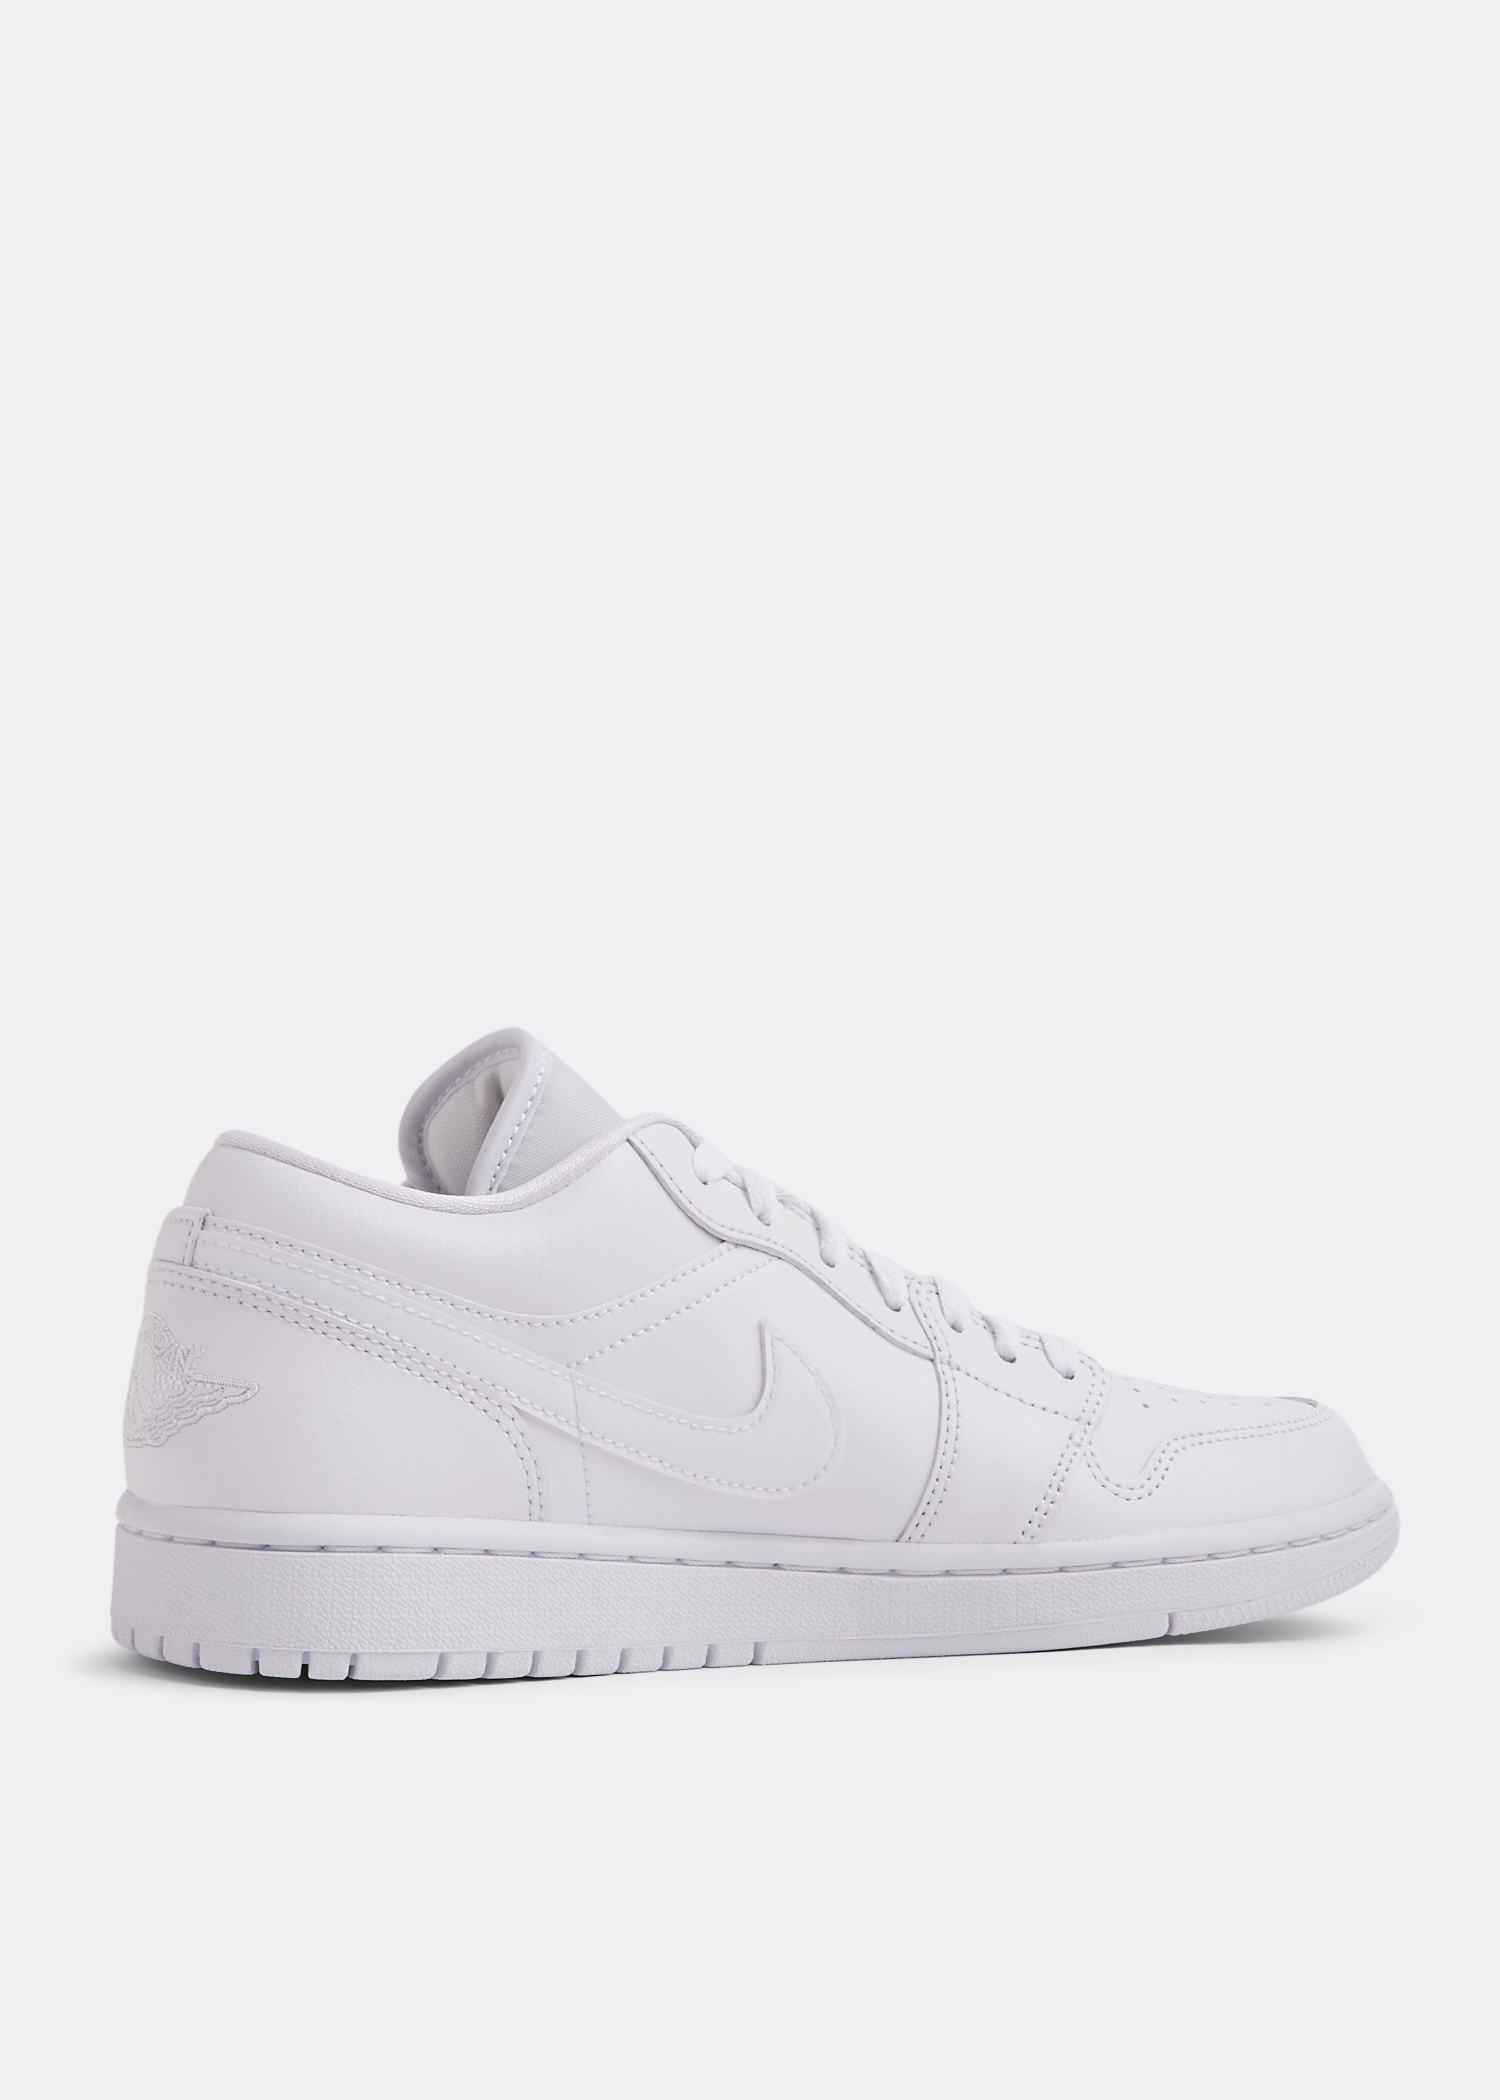 Nike Air Jordan 1 Low 'Triple White' sneakers for Women - White in